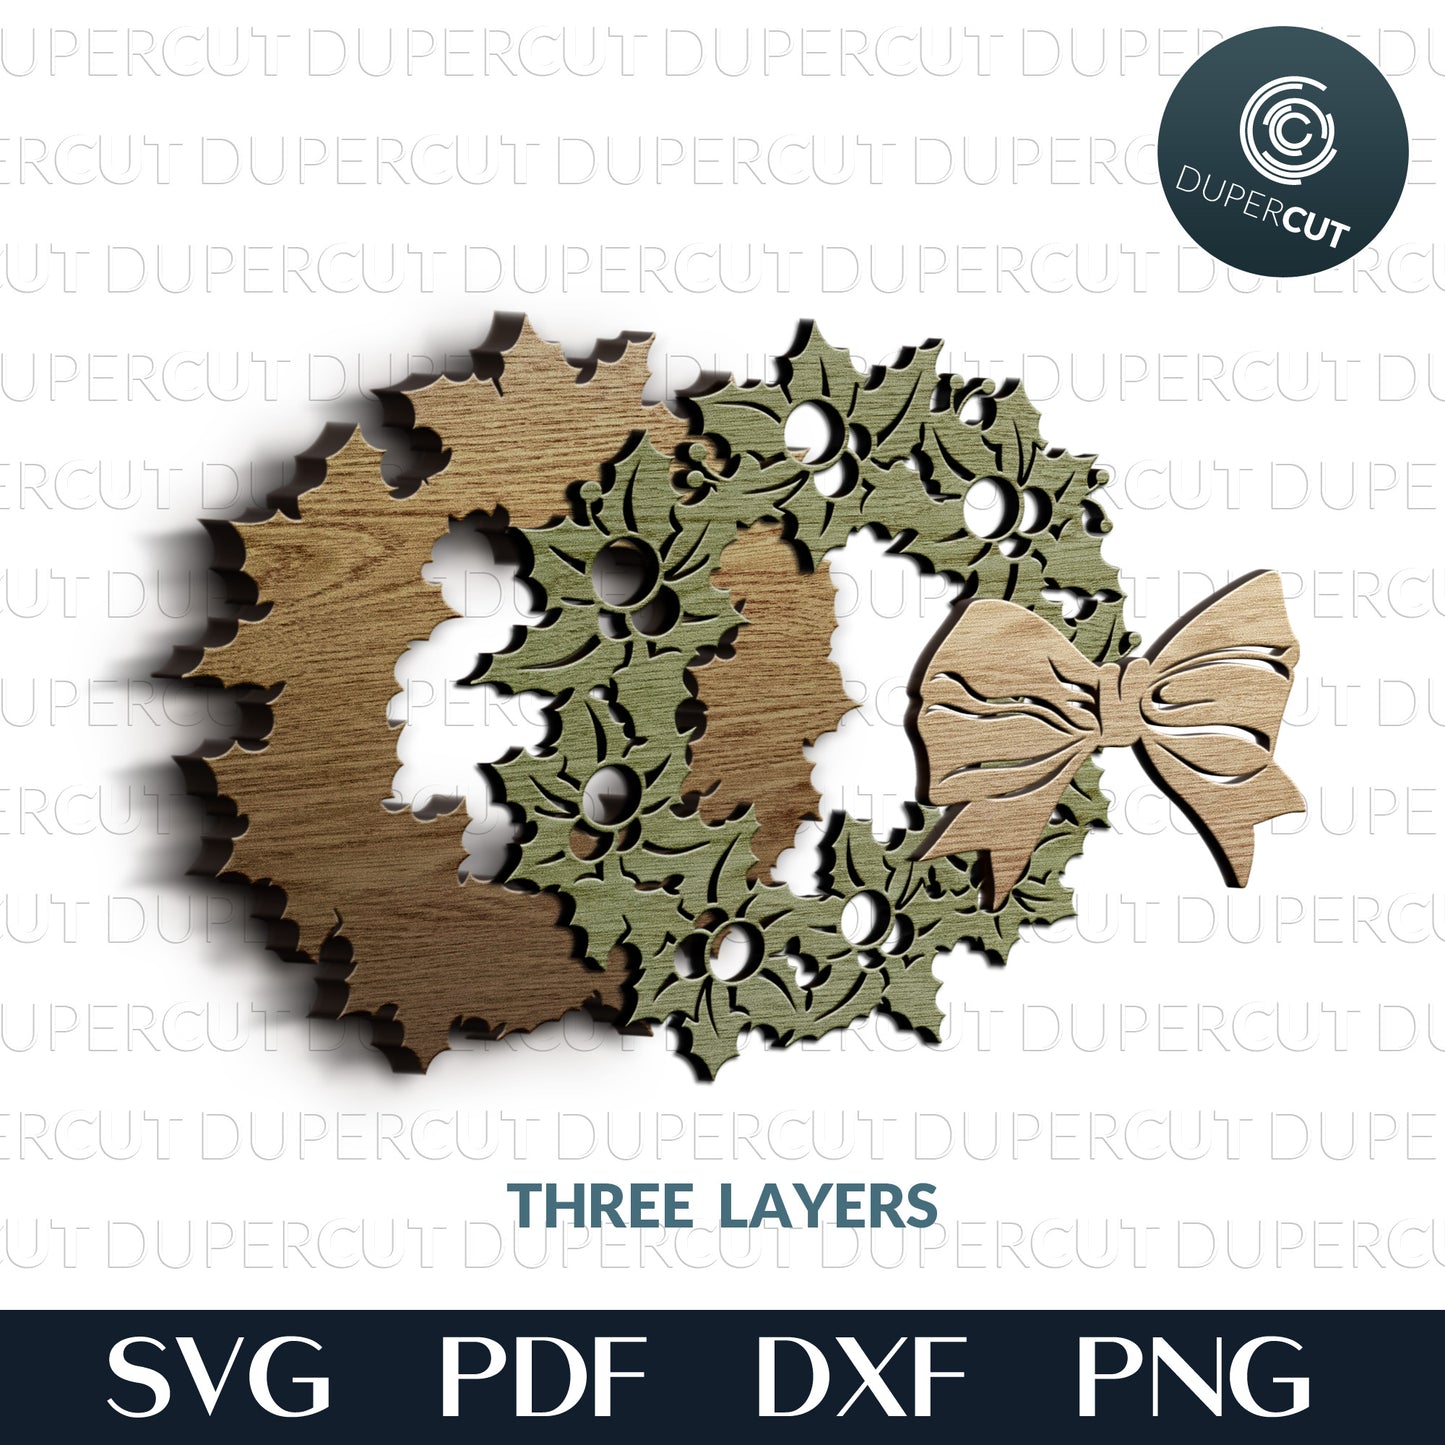 Holiday wreath pattern - add custom names- SVG DXF layered cutting files for Glowforge, Cricut, scroll saw, CNC plasma machines by DuperCut.com